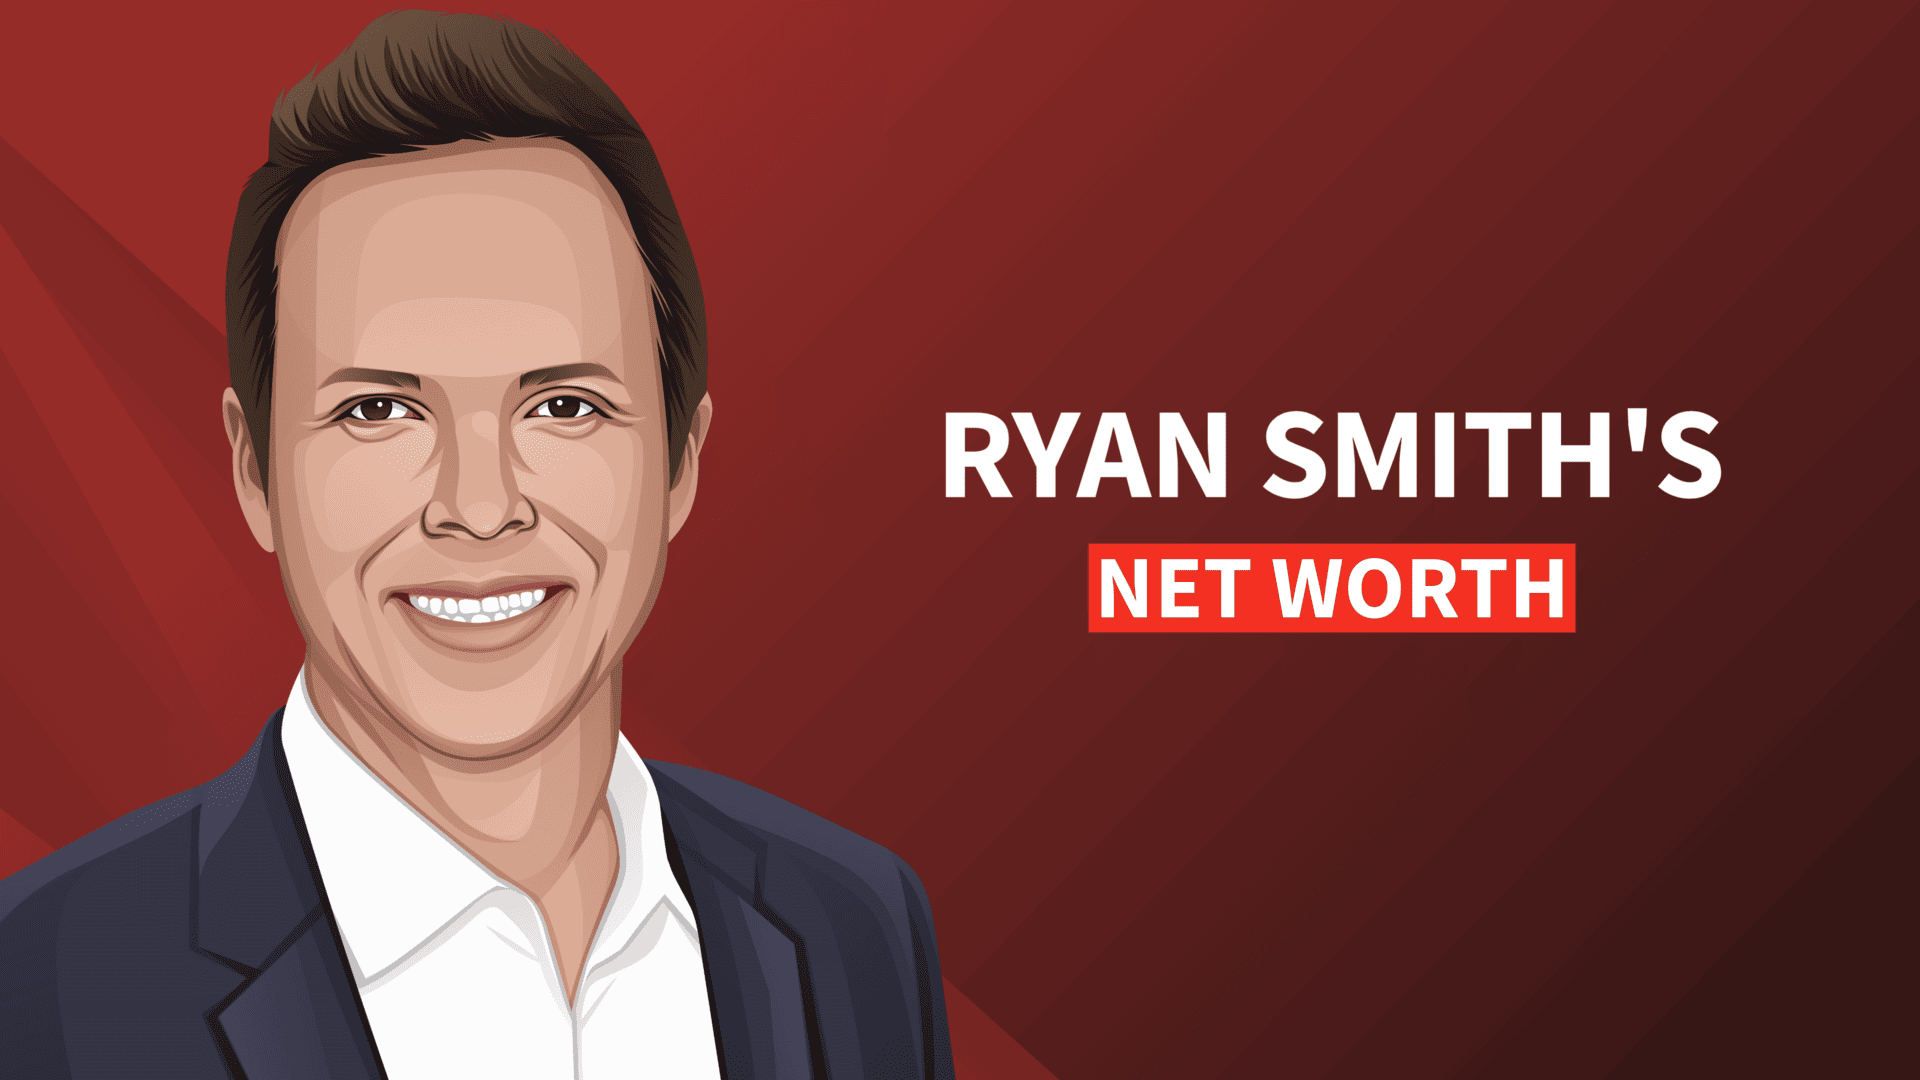 Ryan Smith's net worth